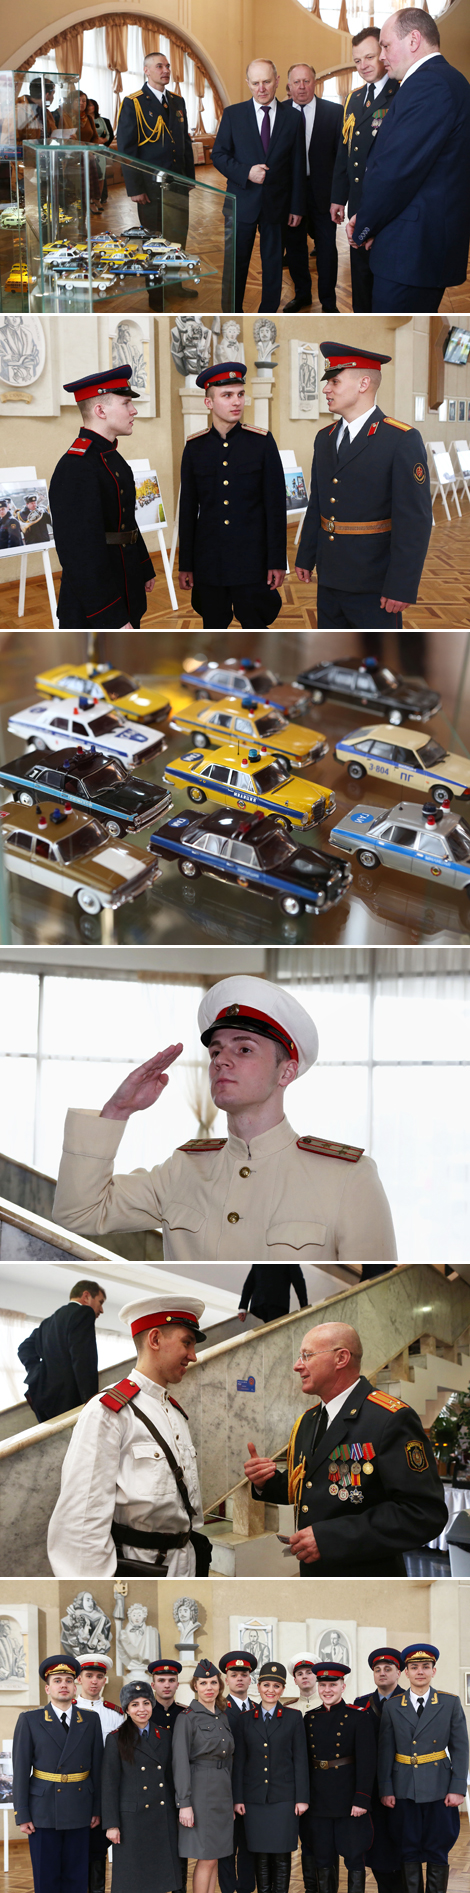 Postwar police uniforms on display in Grodno